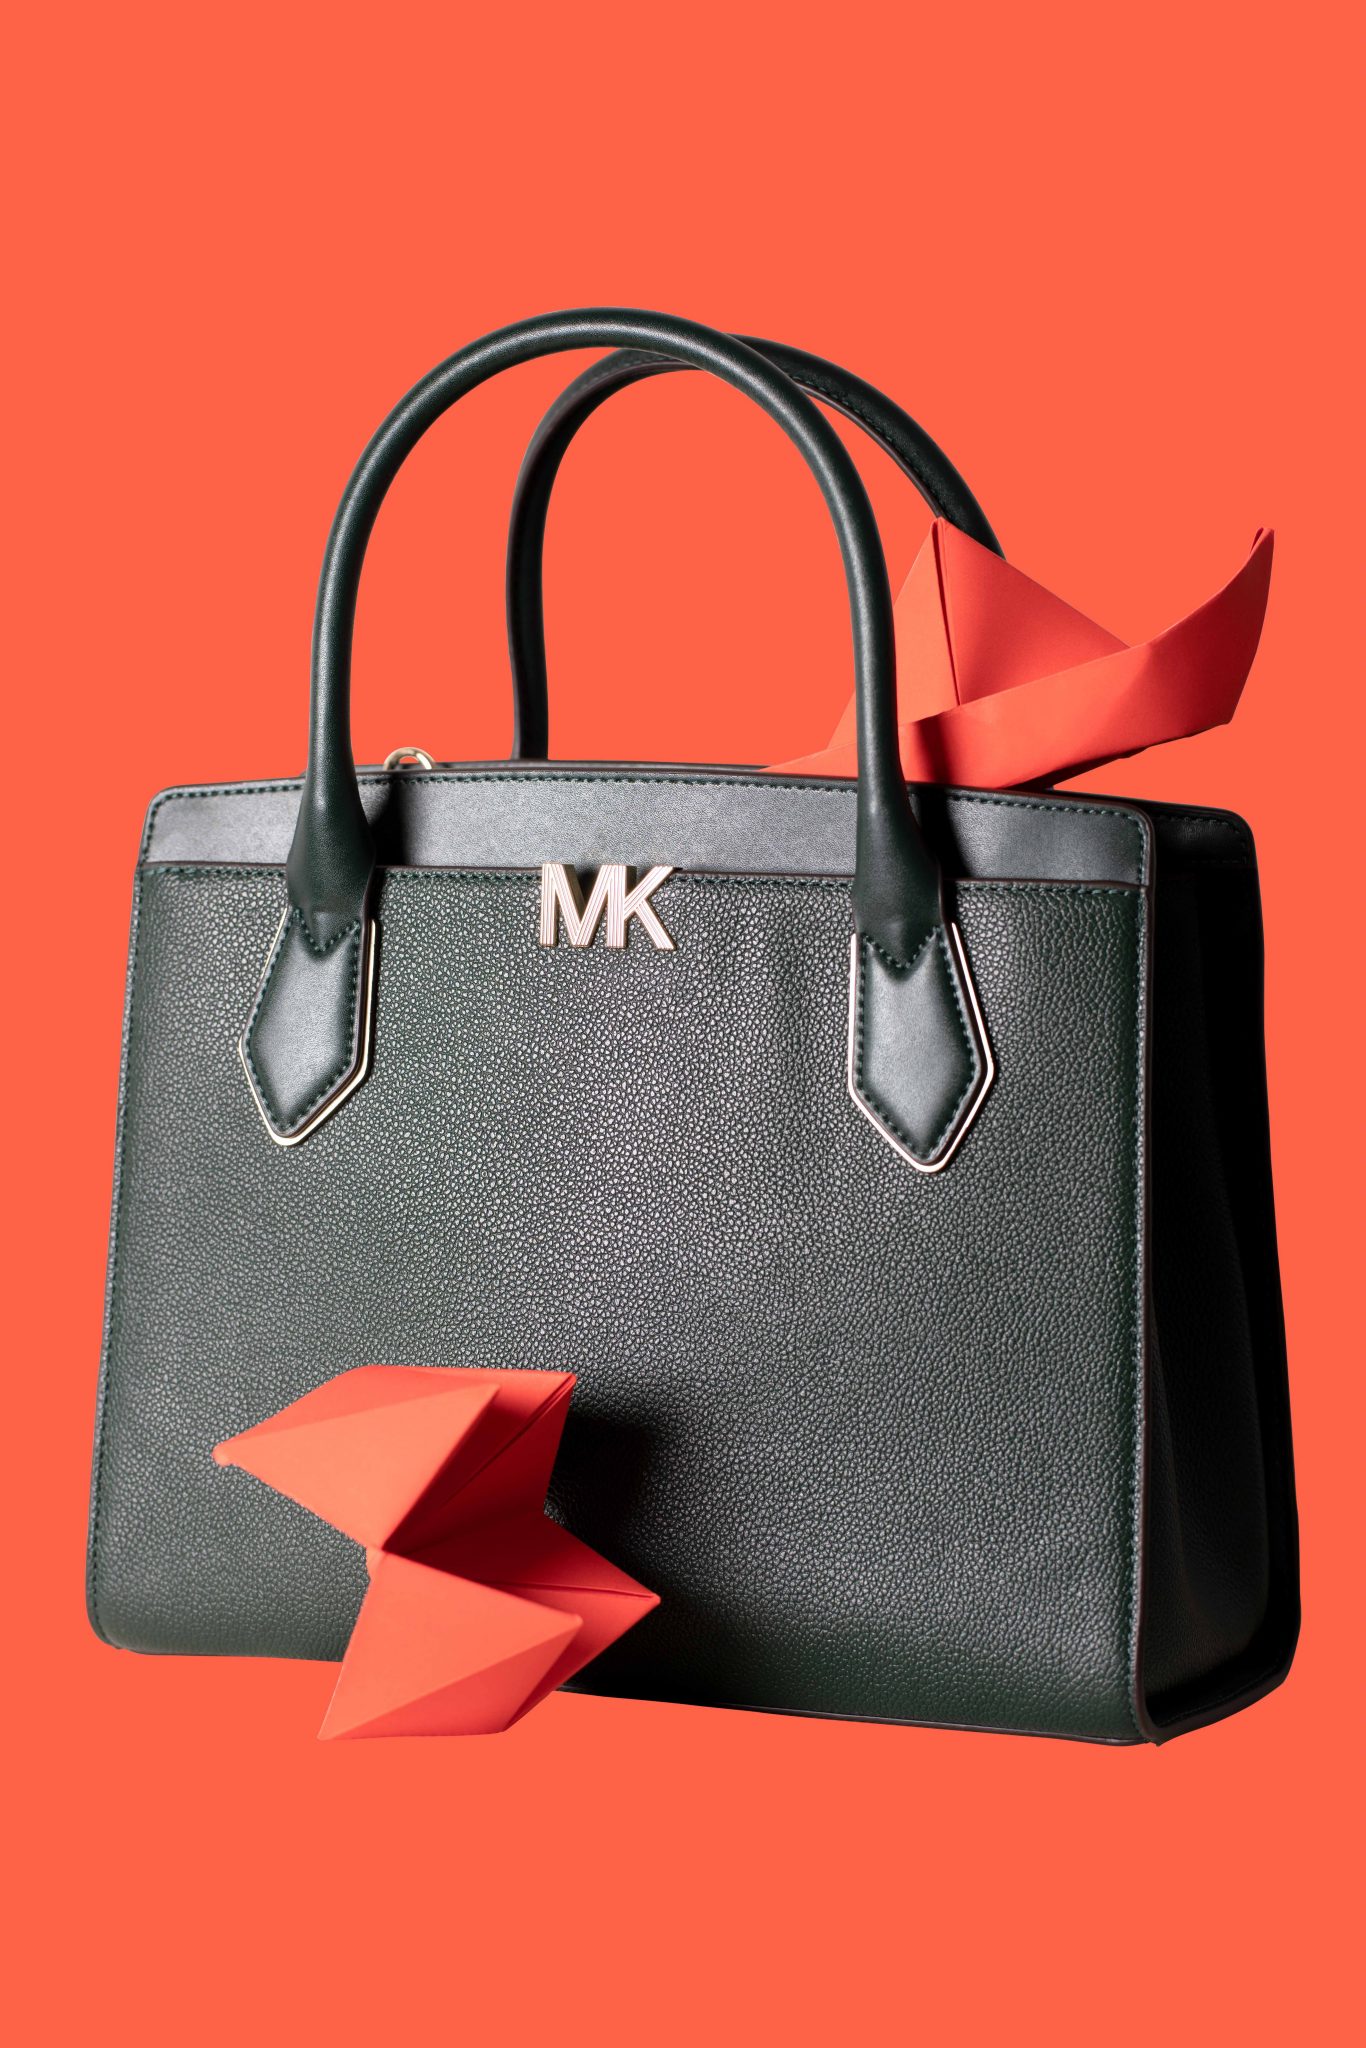 Commercial photo of a Michael Kors handbag